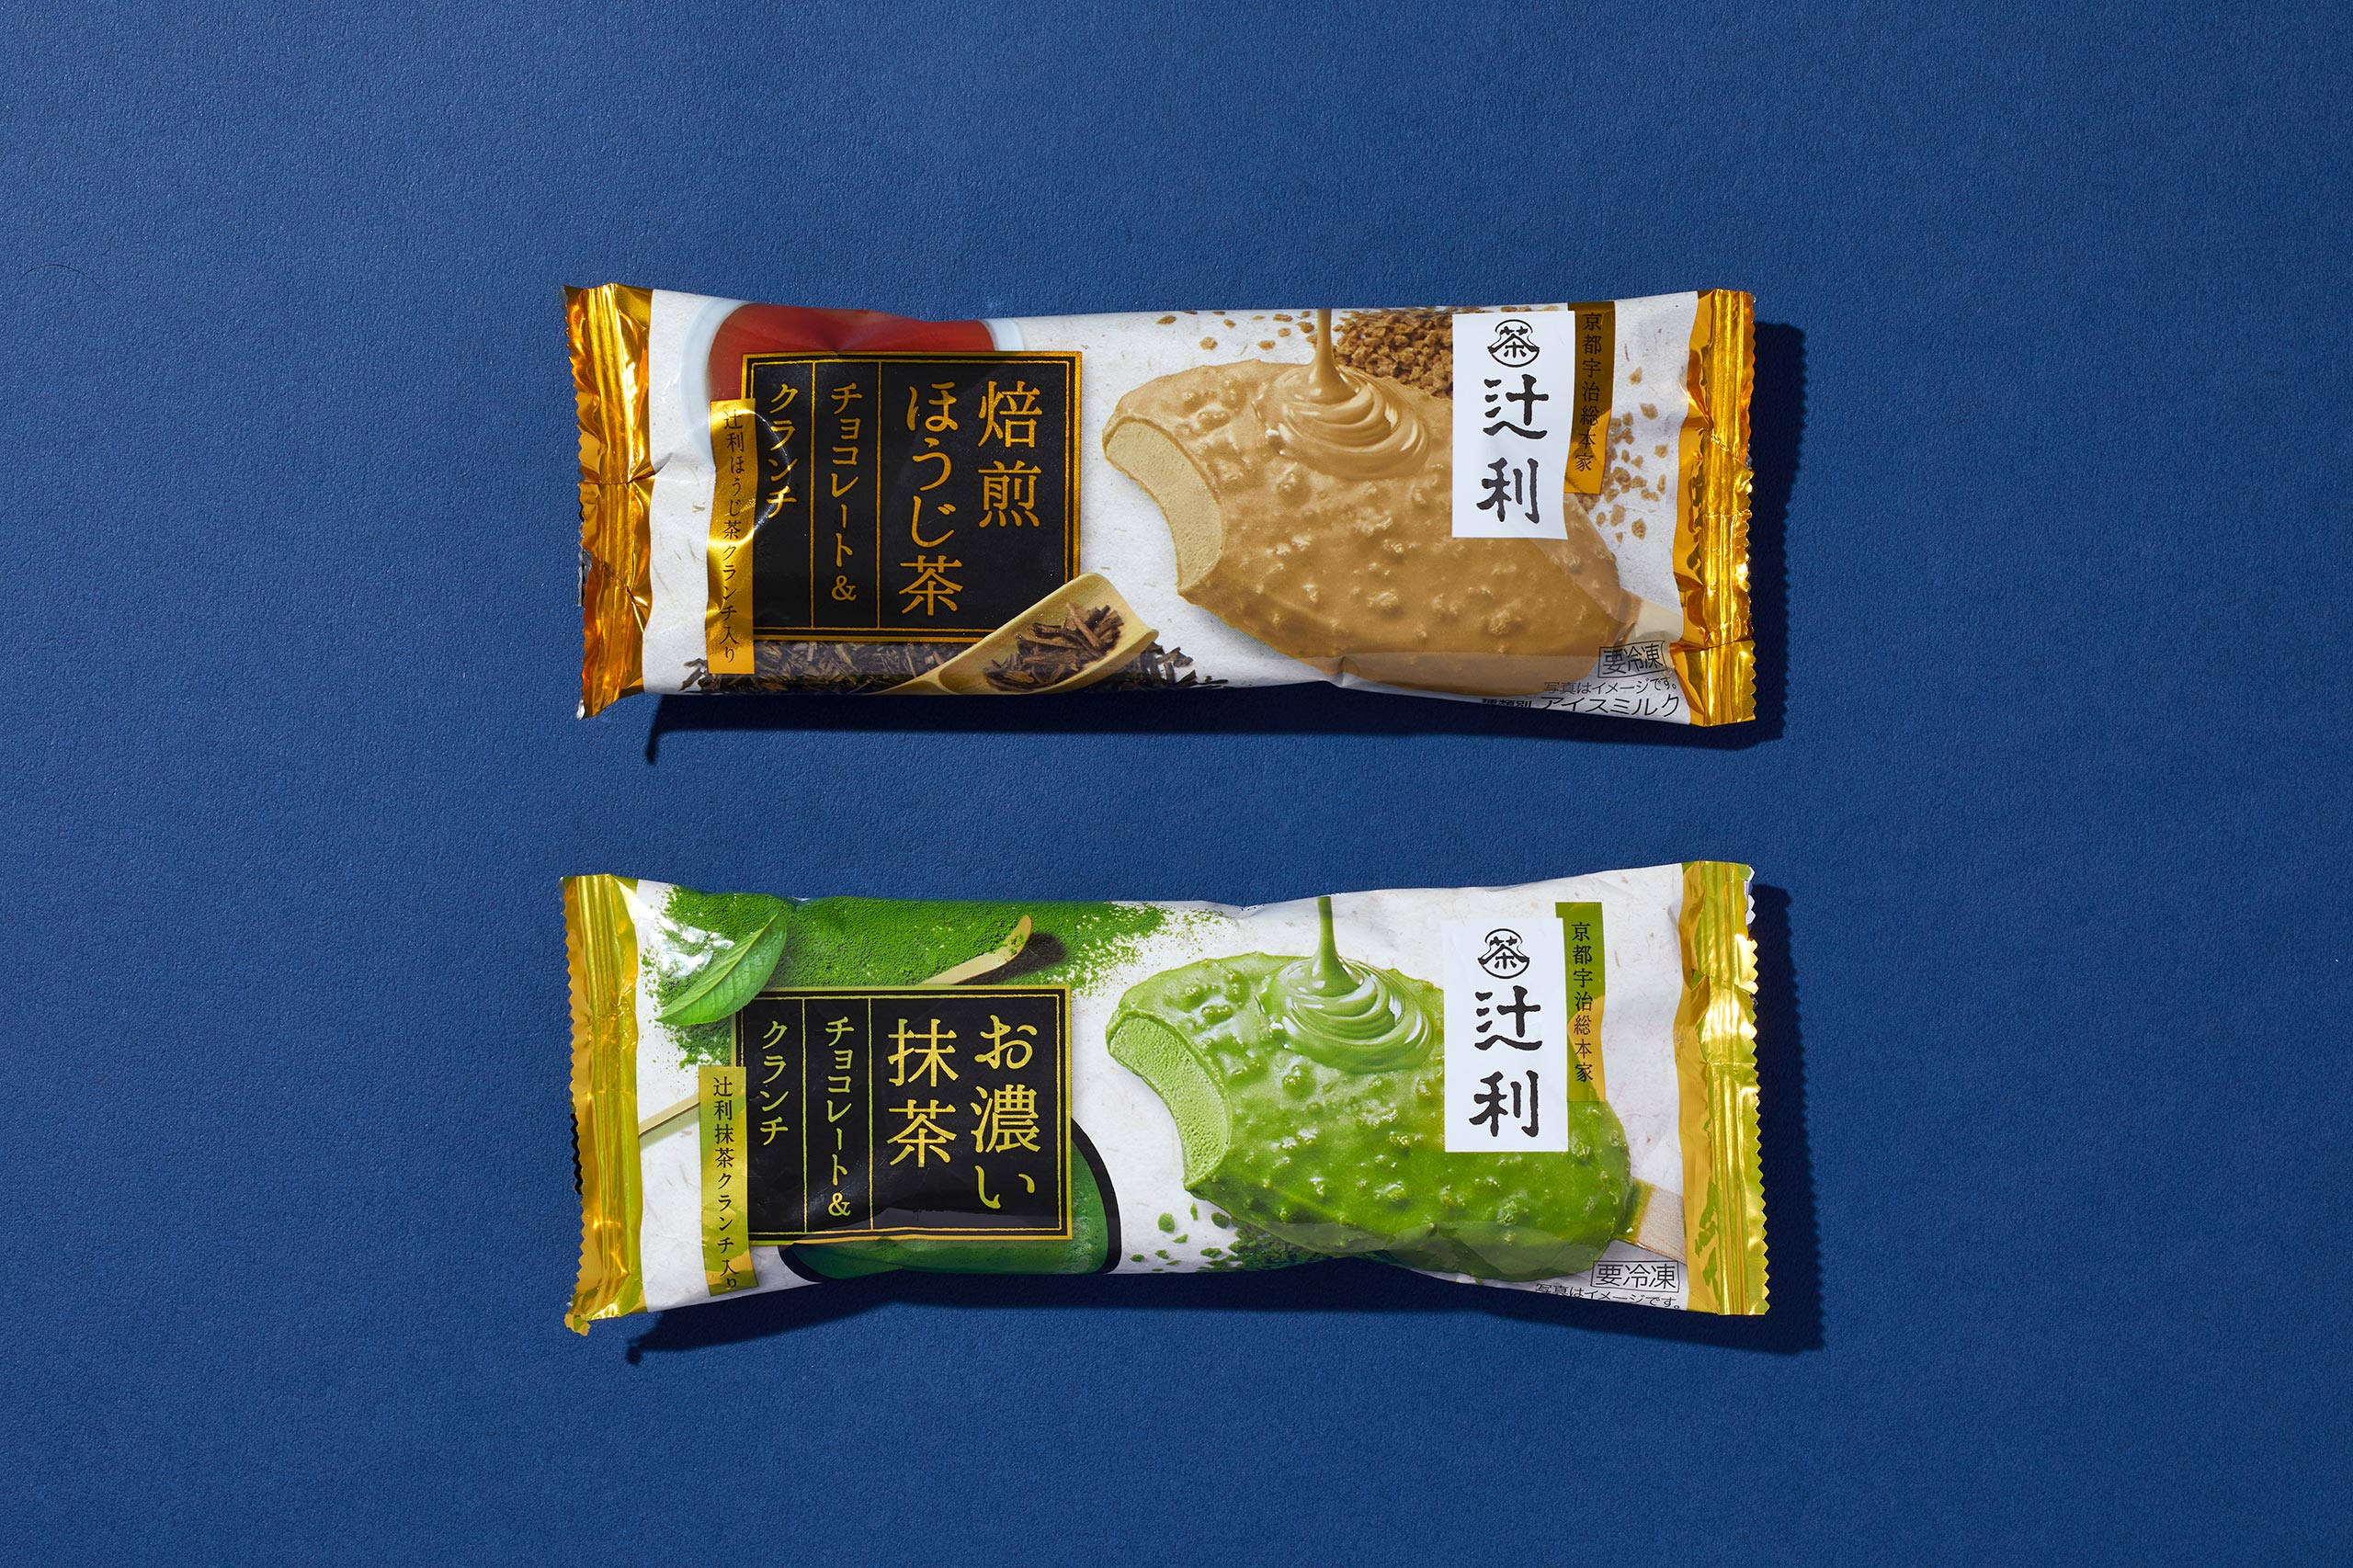 package Tsujiri Ice Cream 2019-2020